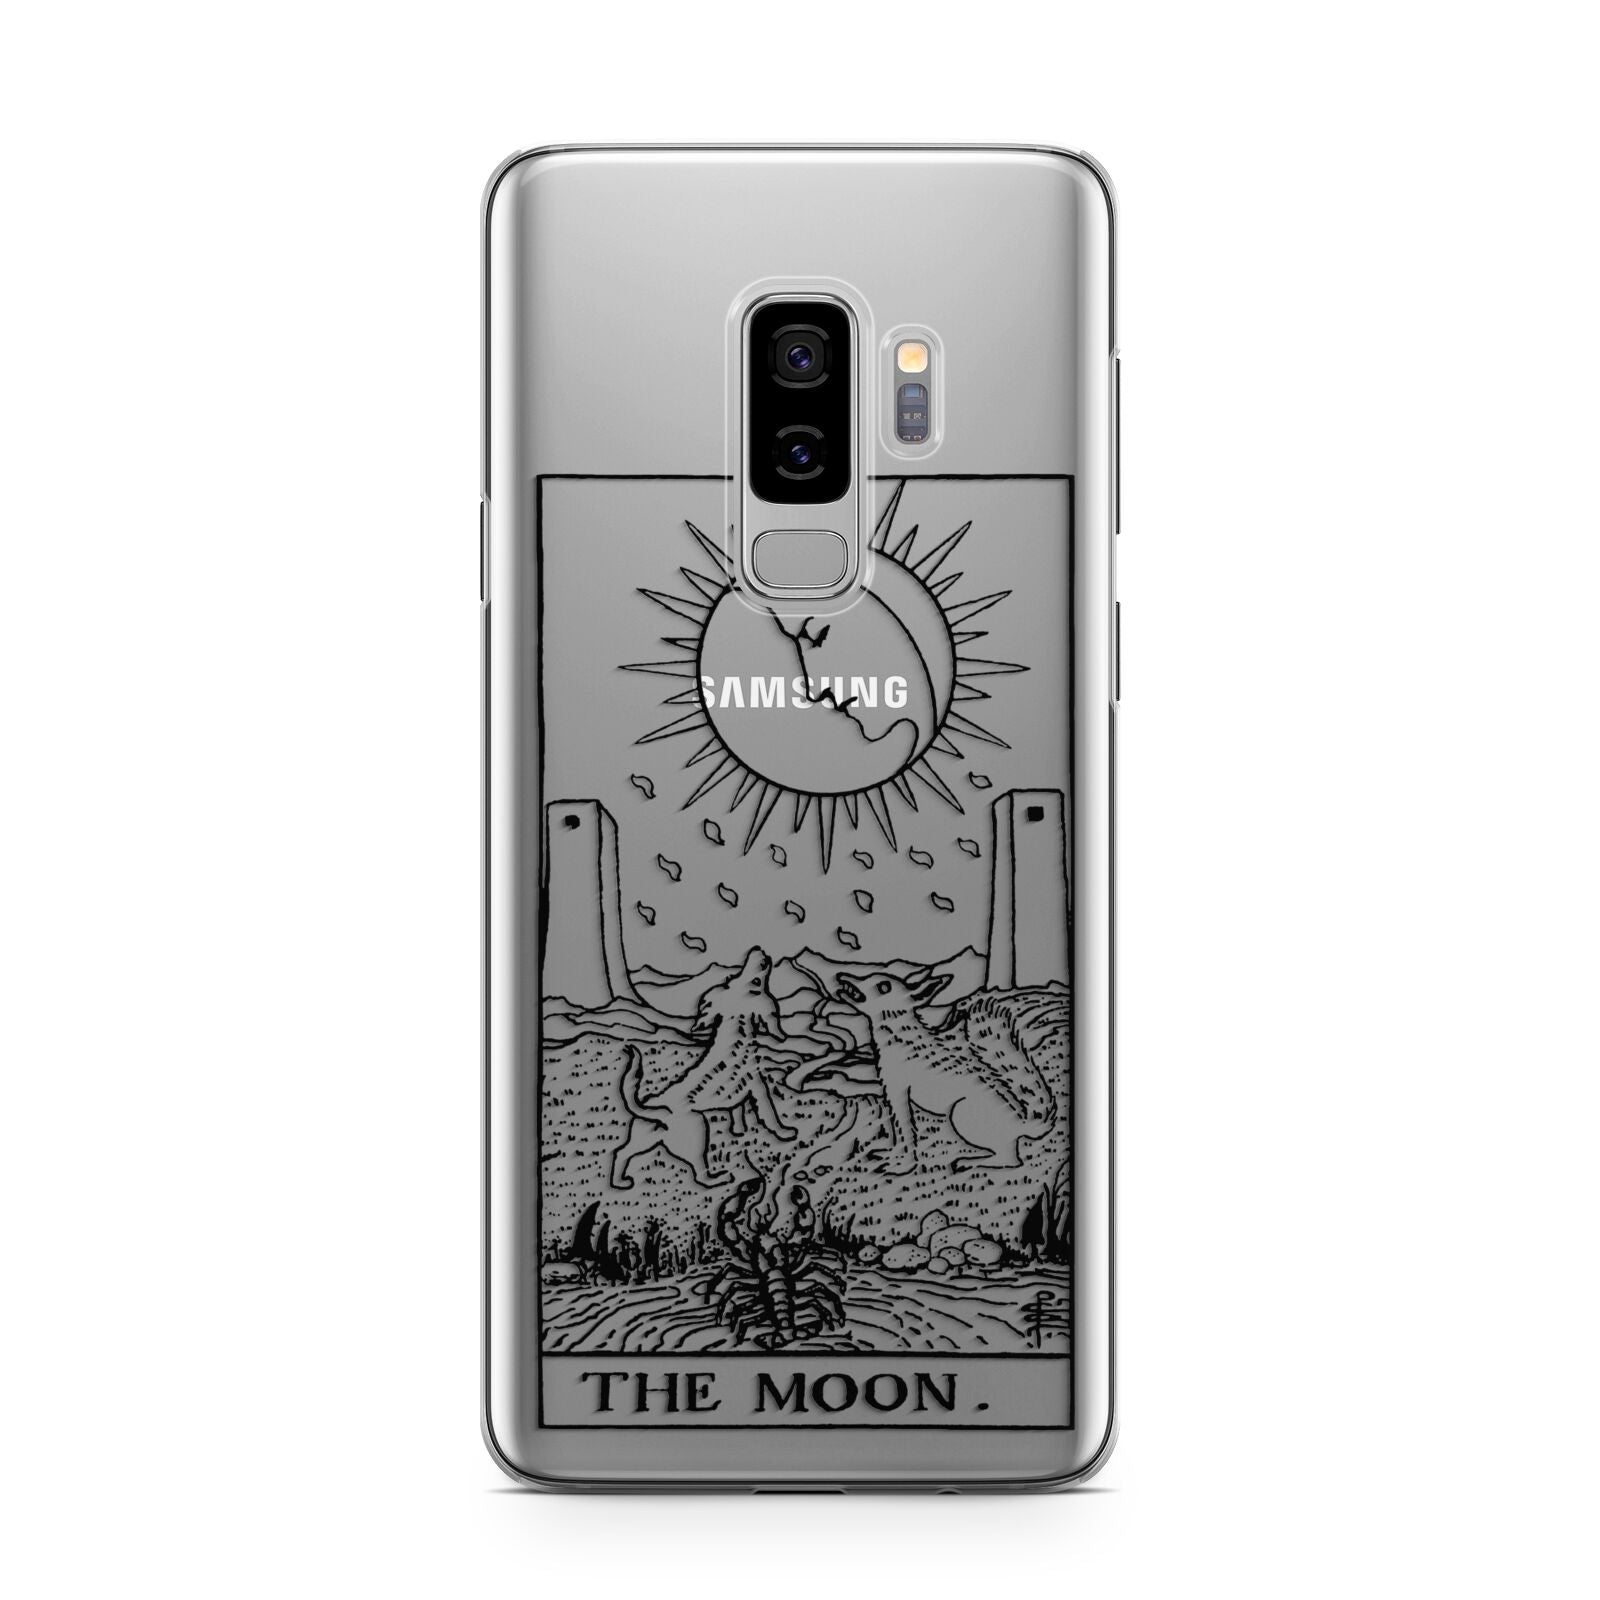 The Moon Monochrome Samsung Galaxy S9 Plus Case on Silver phone